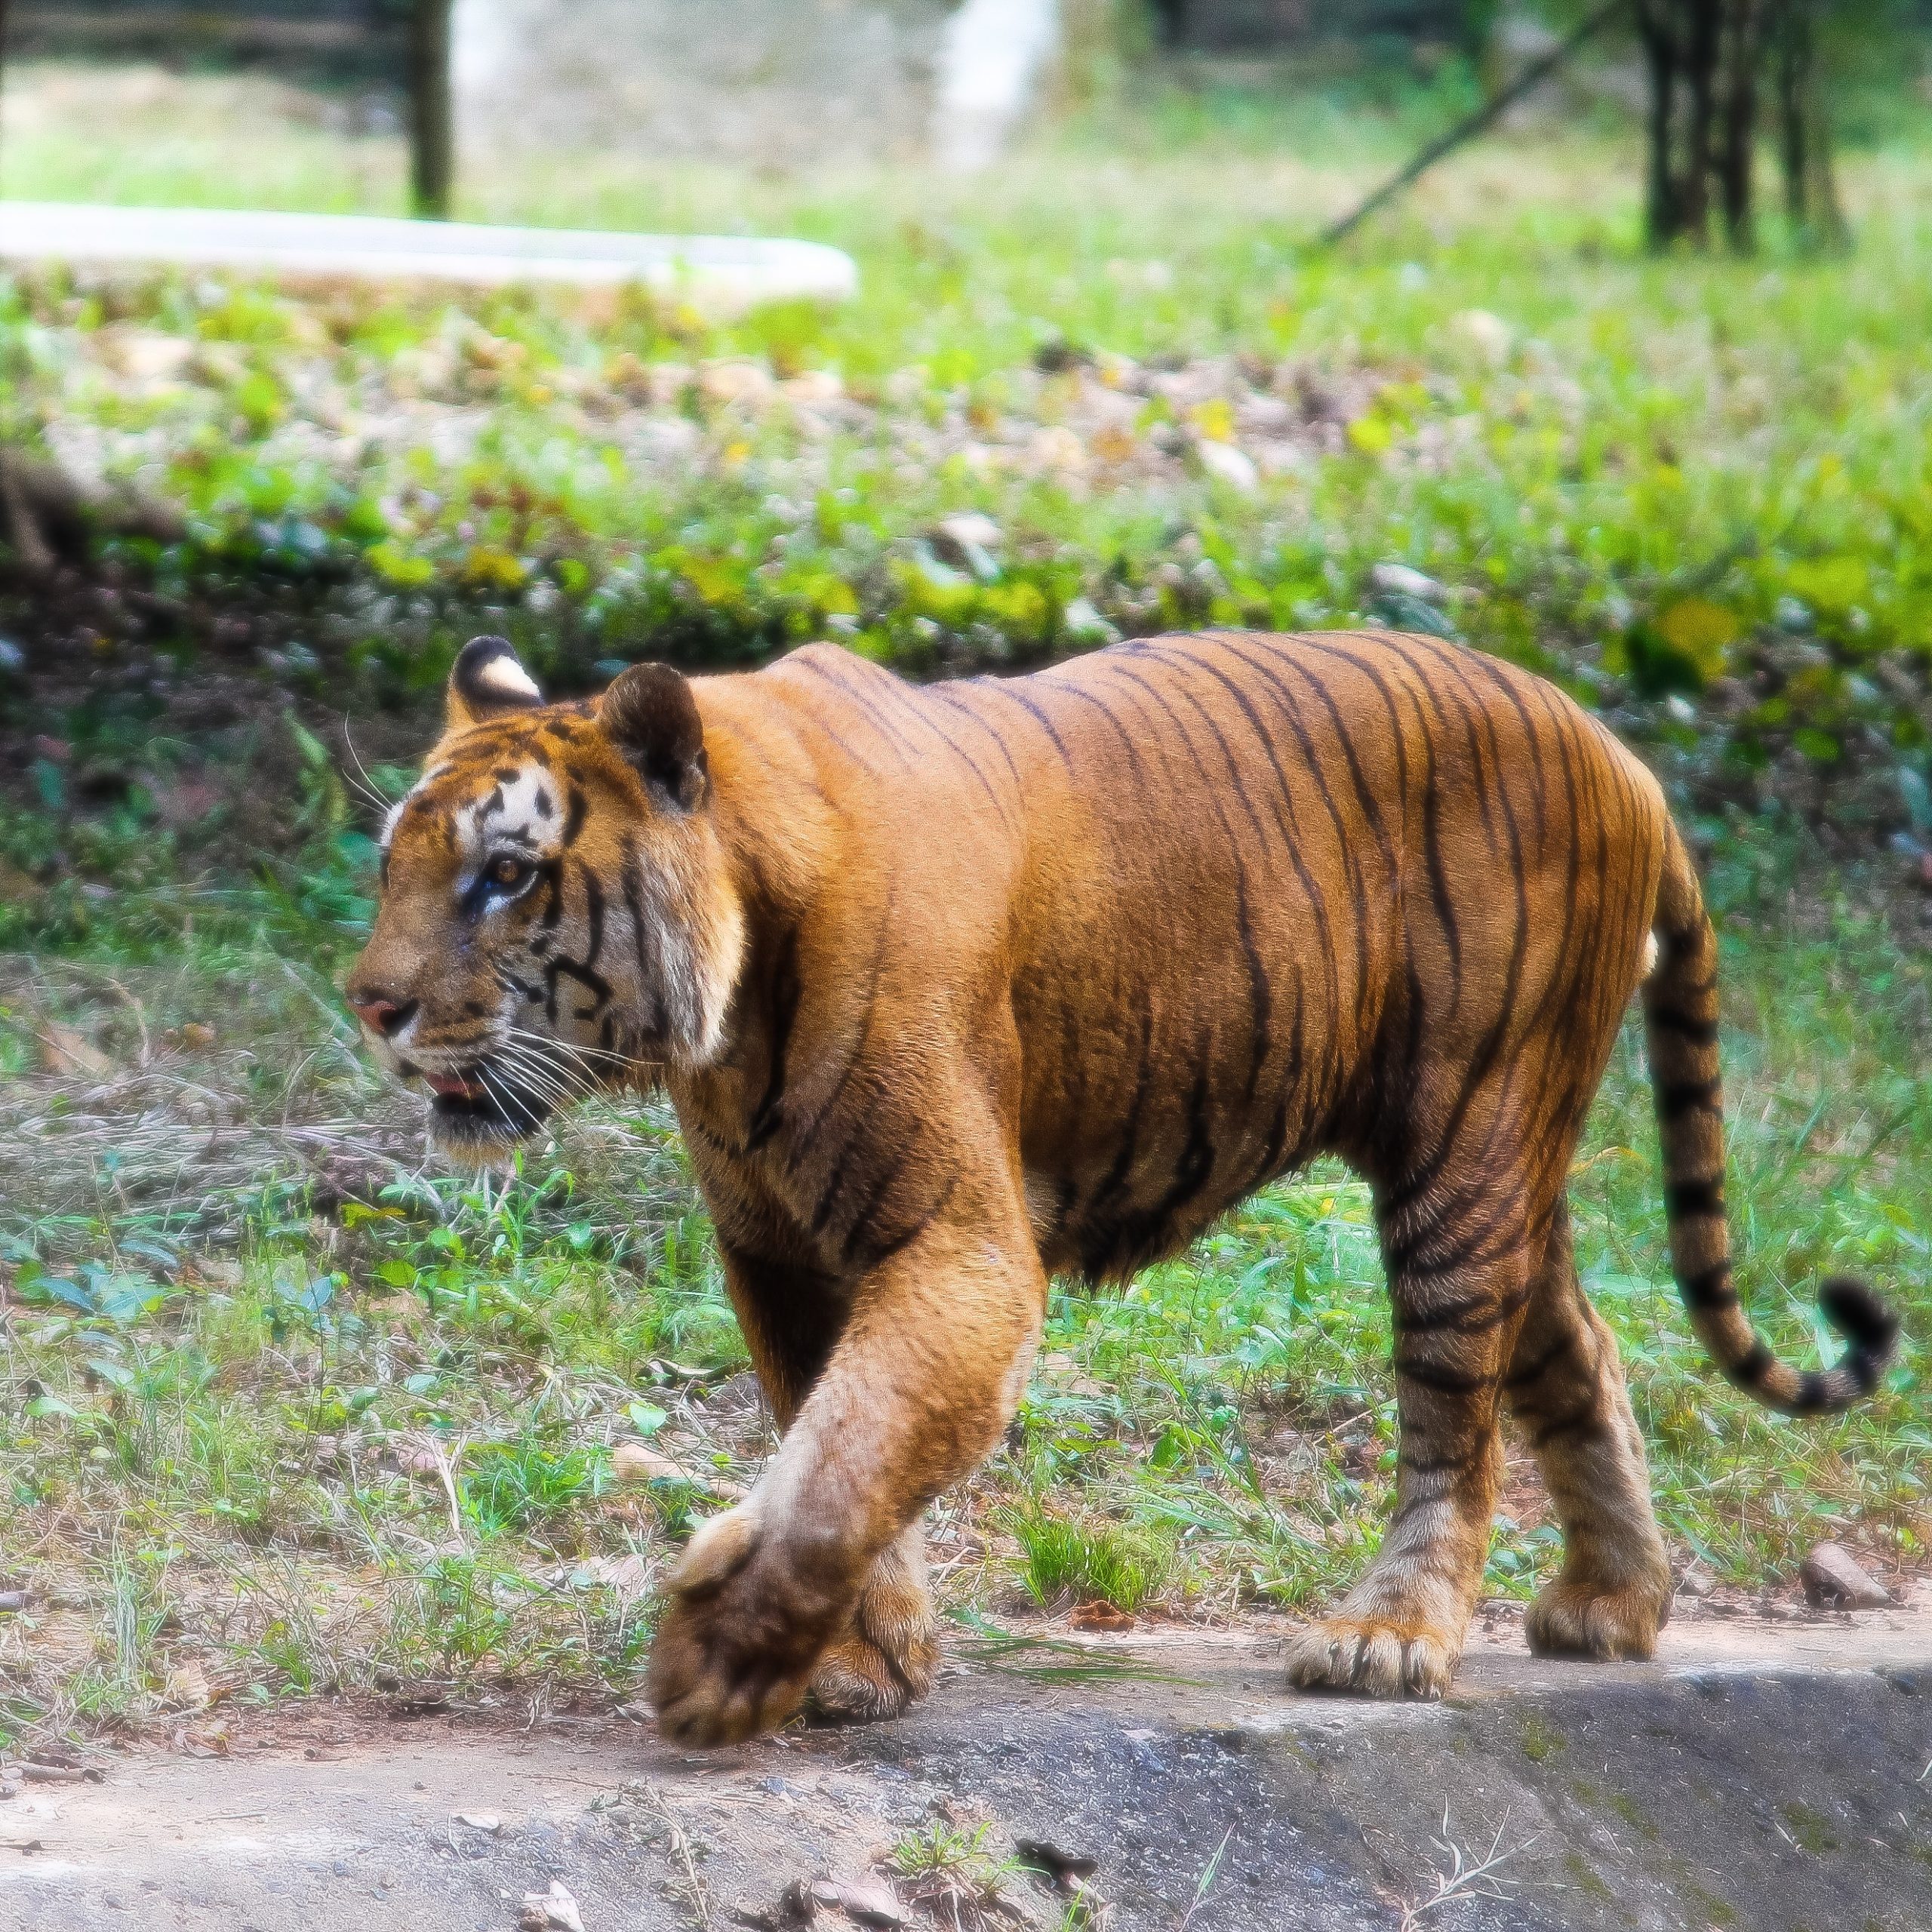 Indian Tiger